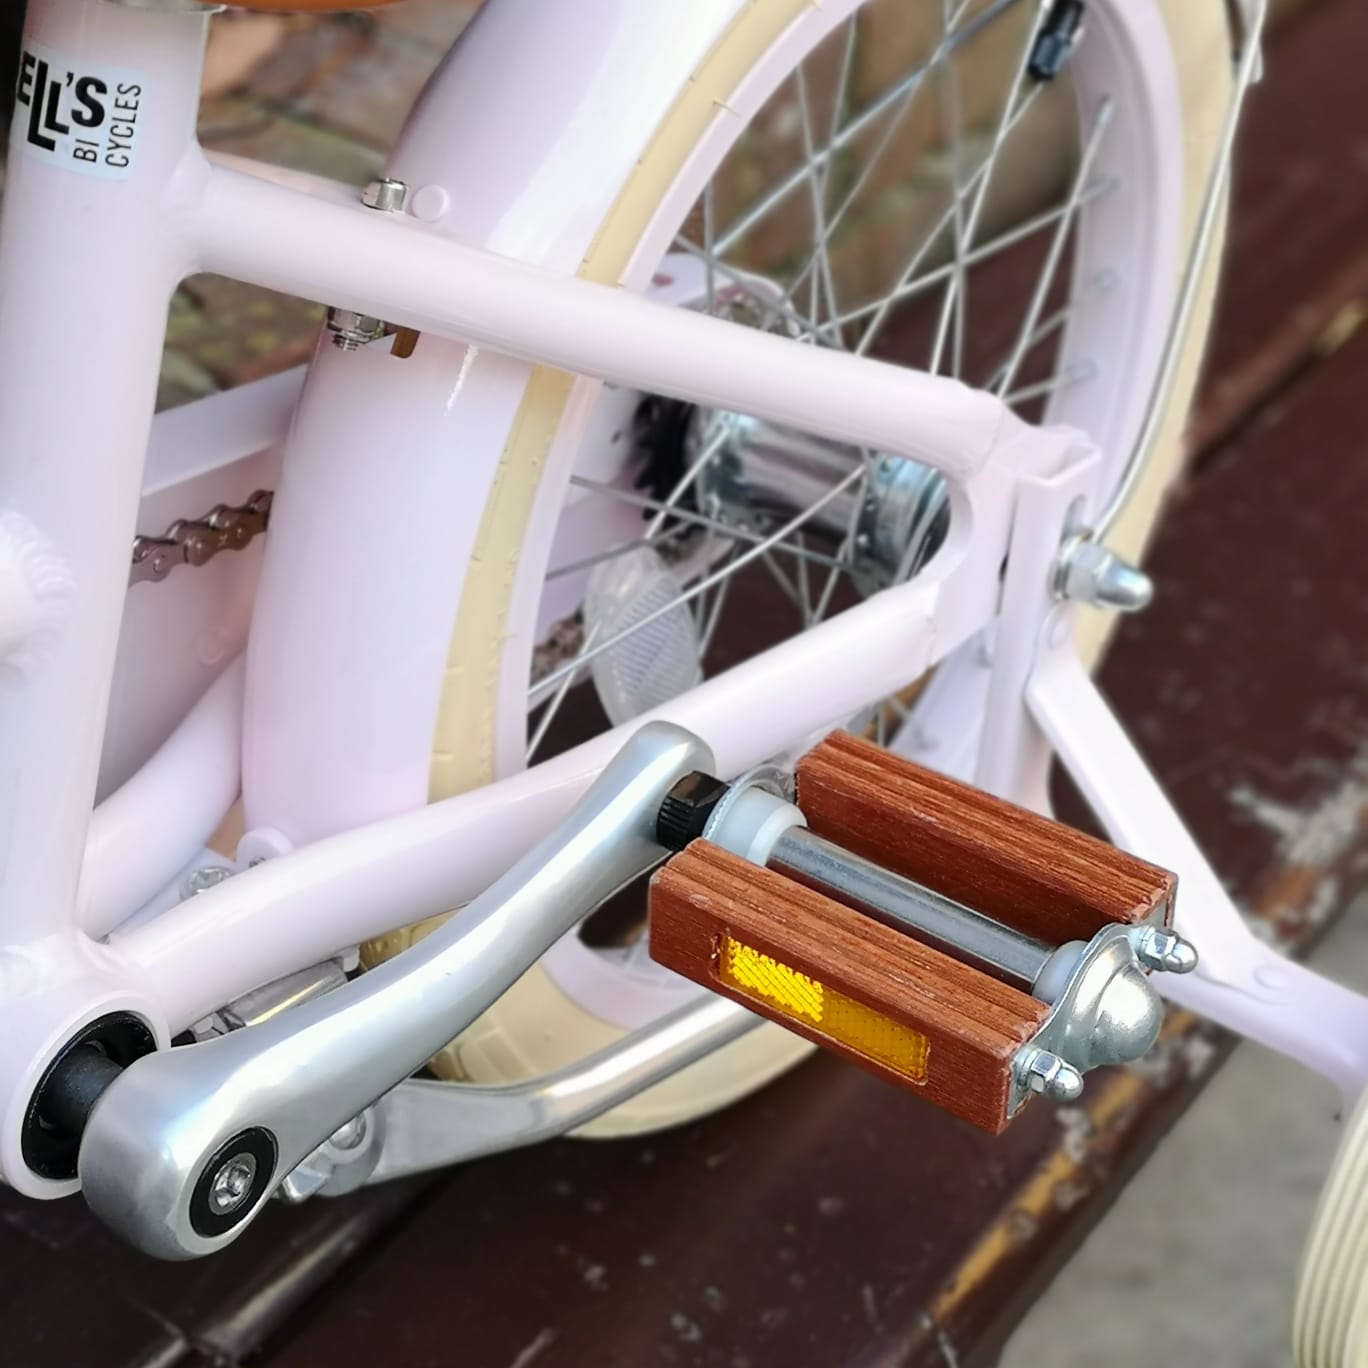 Banwood 16" pedal bike pink